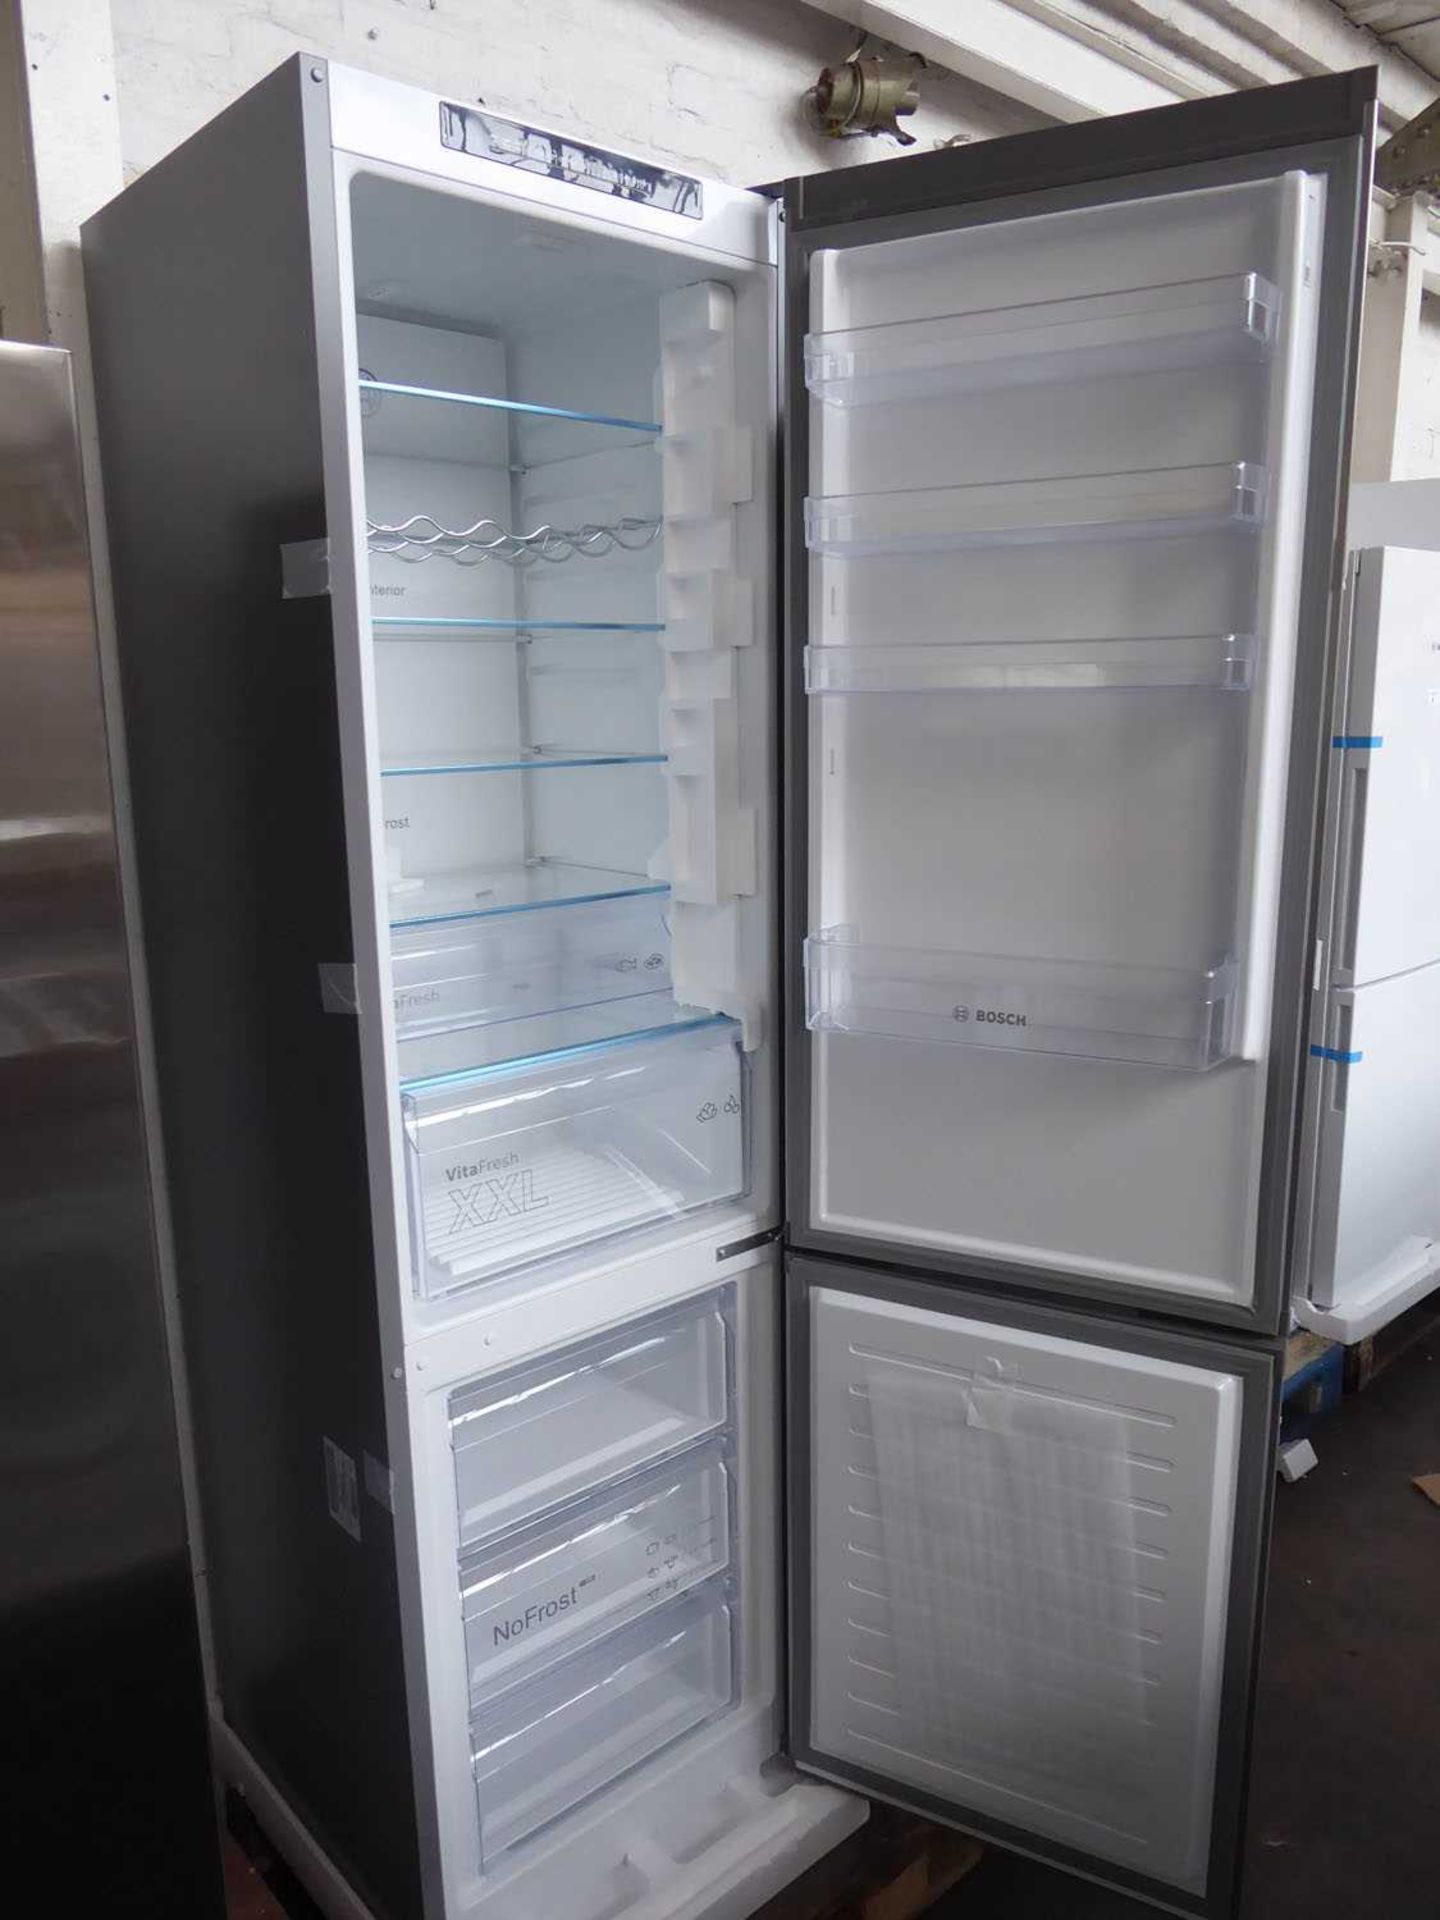 +VAT KGN392LDFGB Bosch Free-standing fridge-freezer - Image 2 of 2